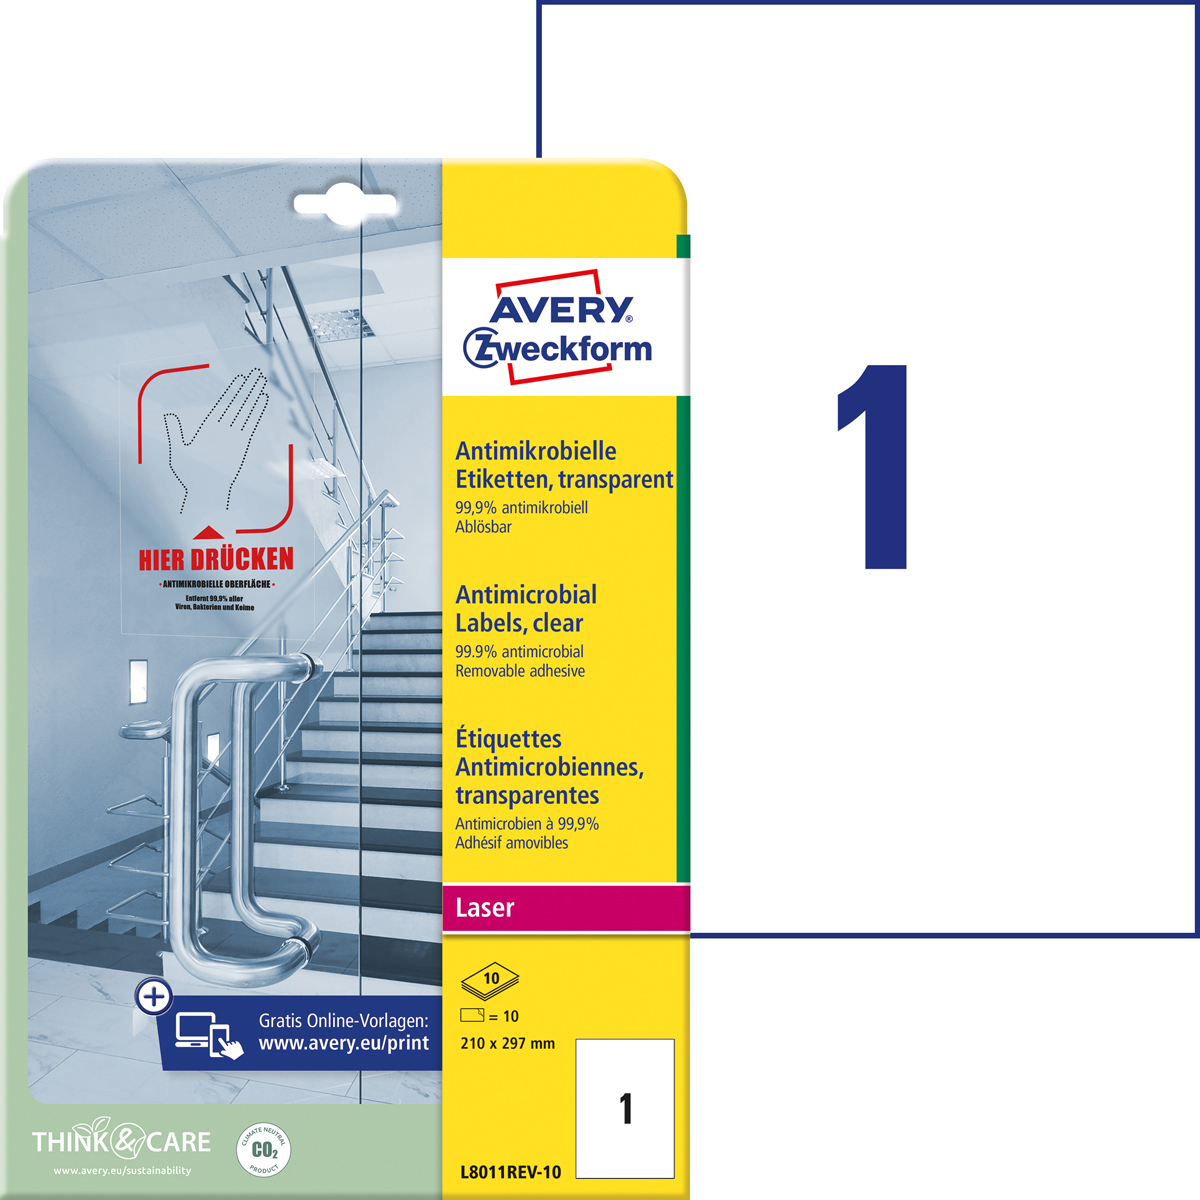 Avery ZweckformL8011REV-10 Antimikrobielle Etiketten, 210x297 mm, 10 Bogen/10 Etiketten, ablösbar trans.